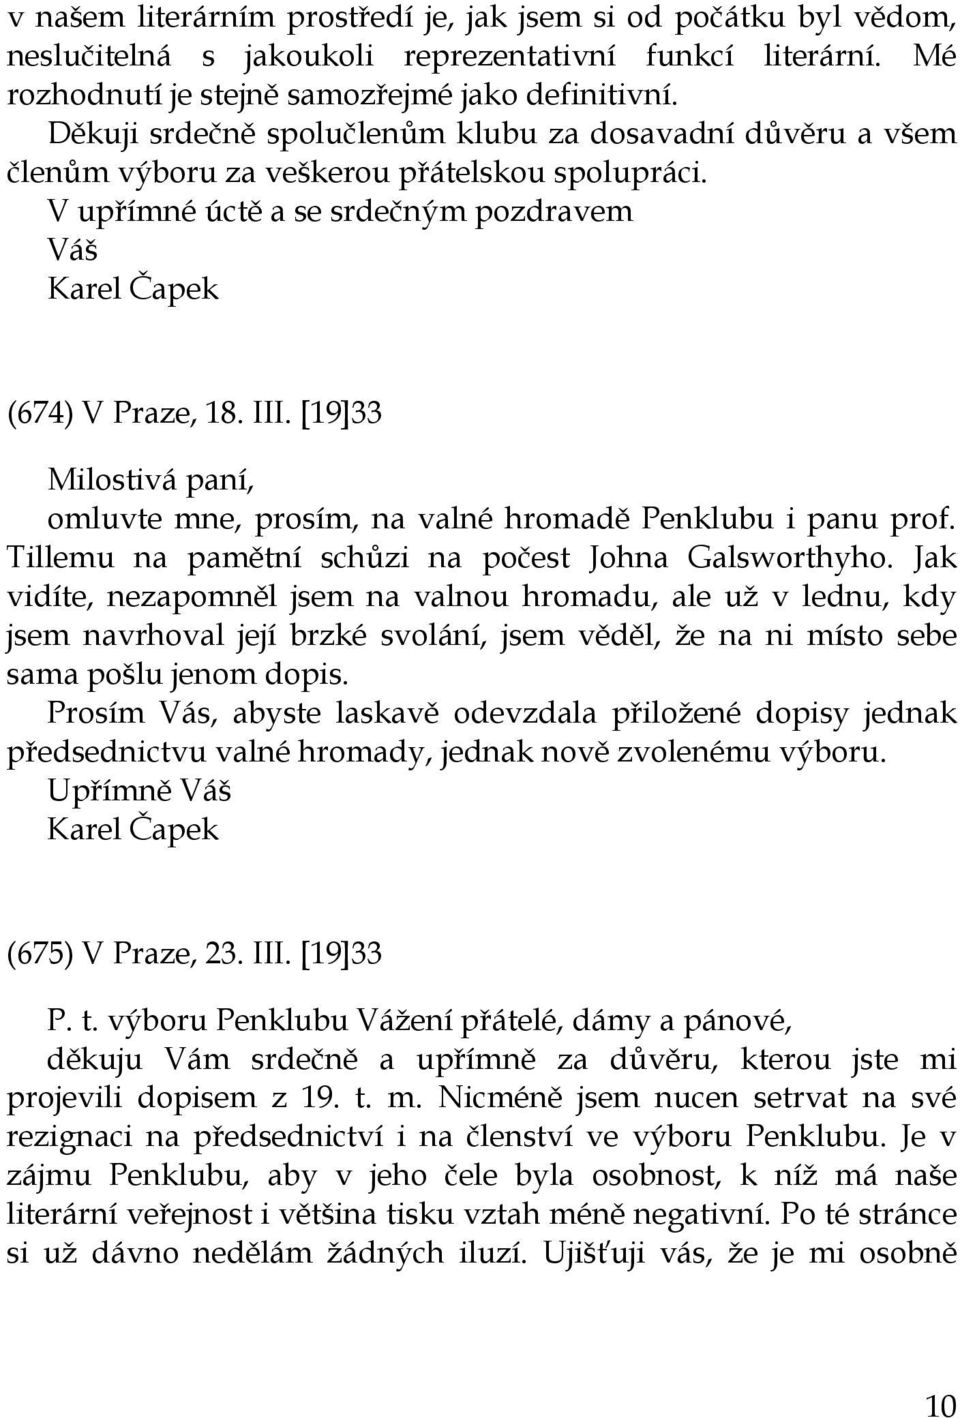 Karel Čapek Korespondence II - PDF Stažení zdarma